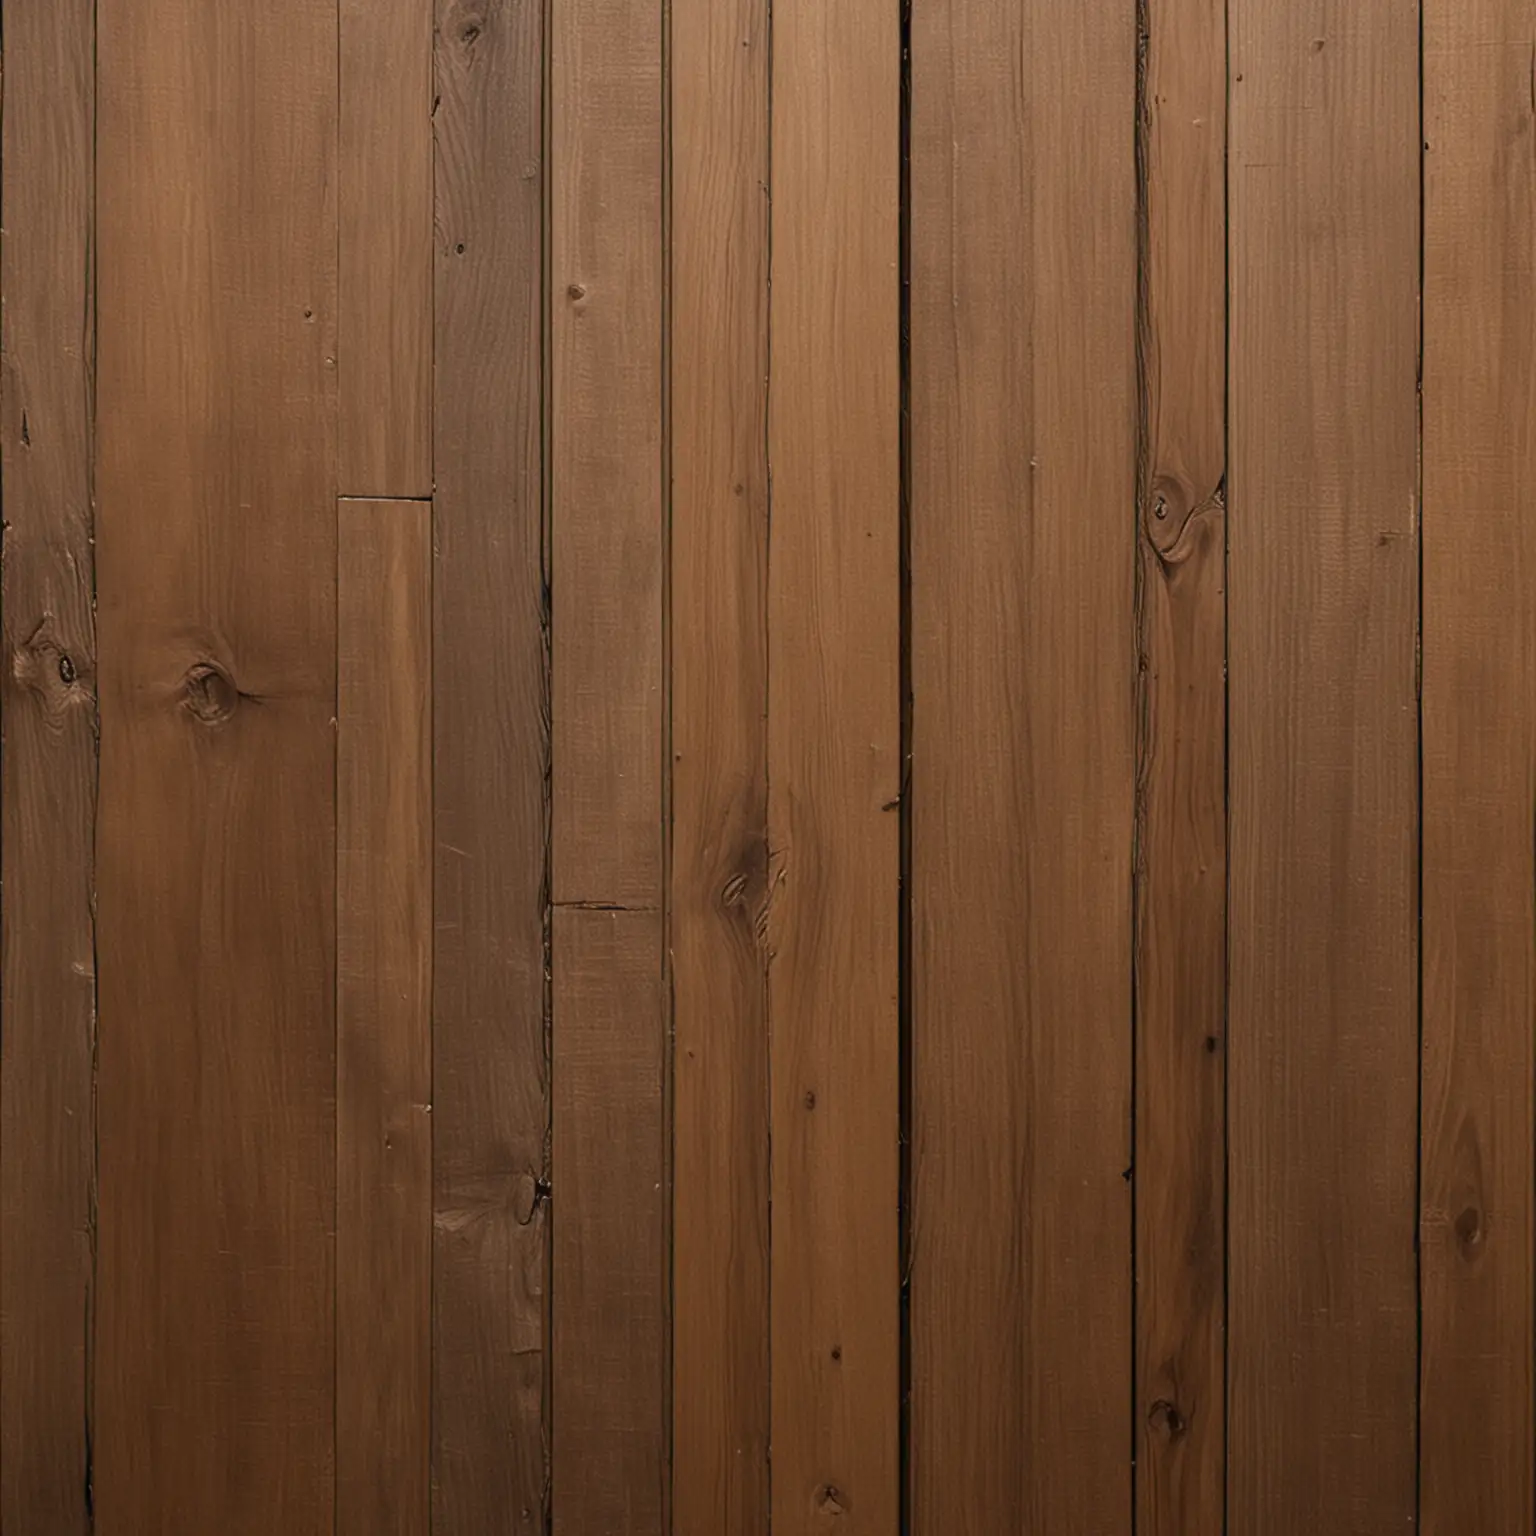 Vertical-Wooden-Wall-Texture-Background